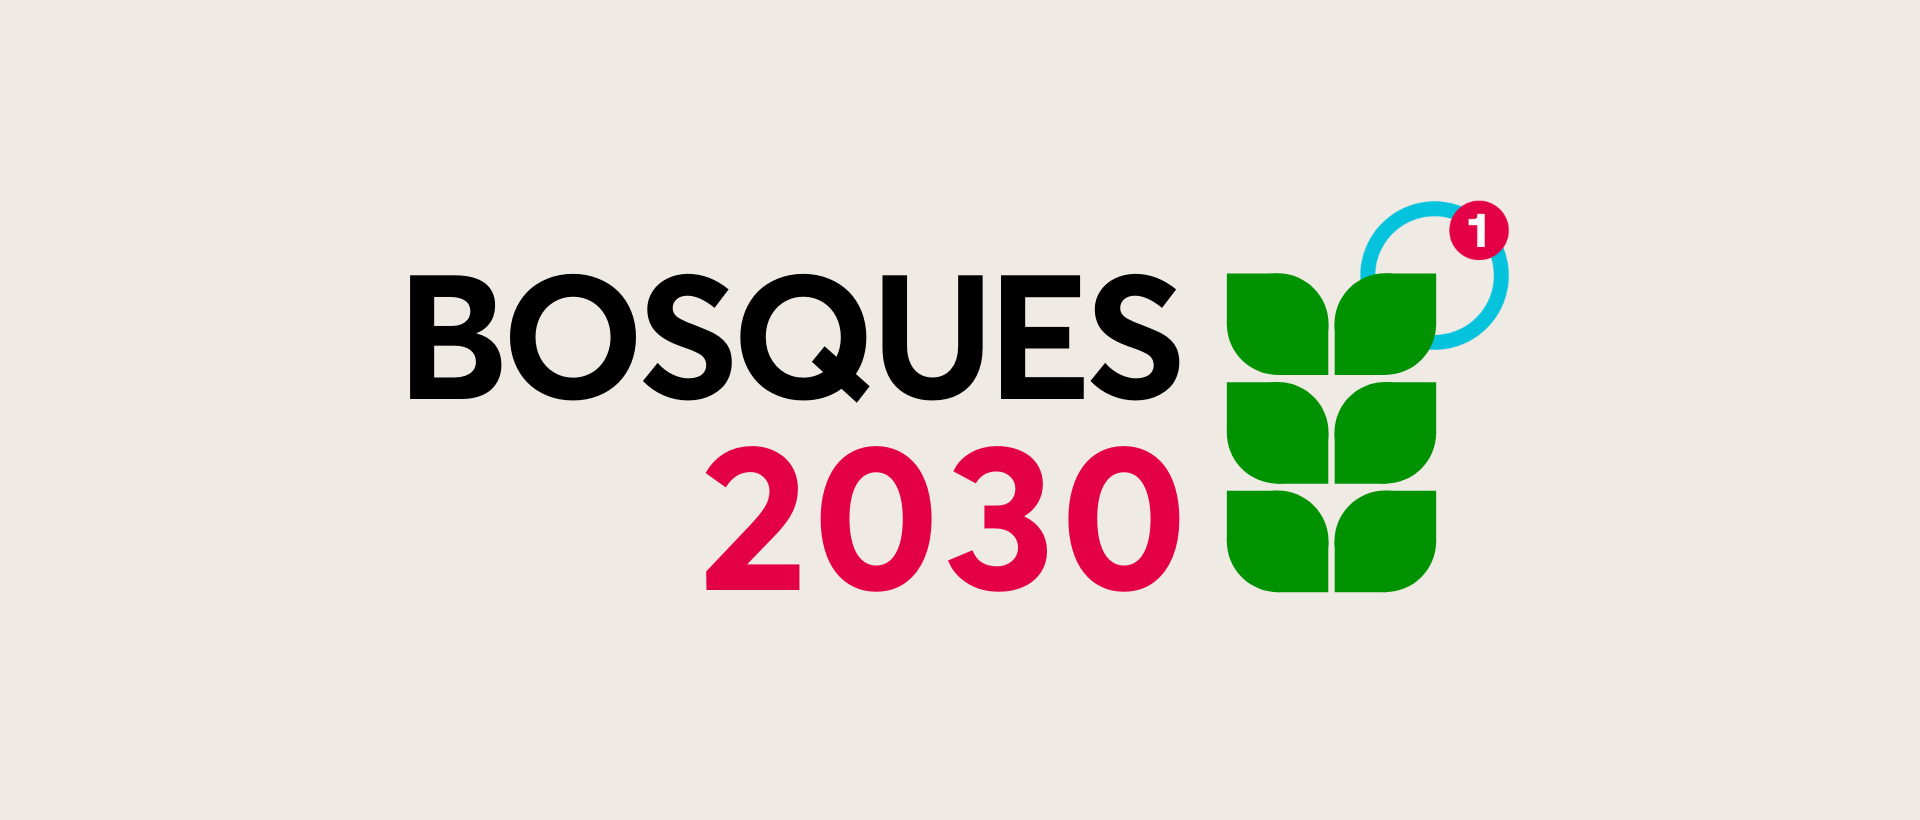 BOSQUES 2030 (4)